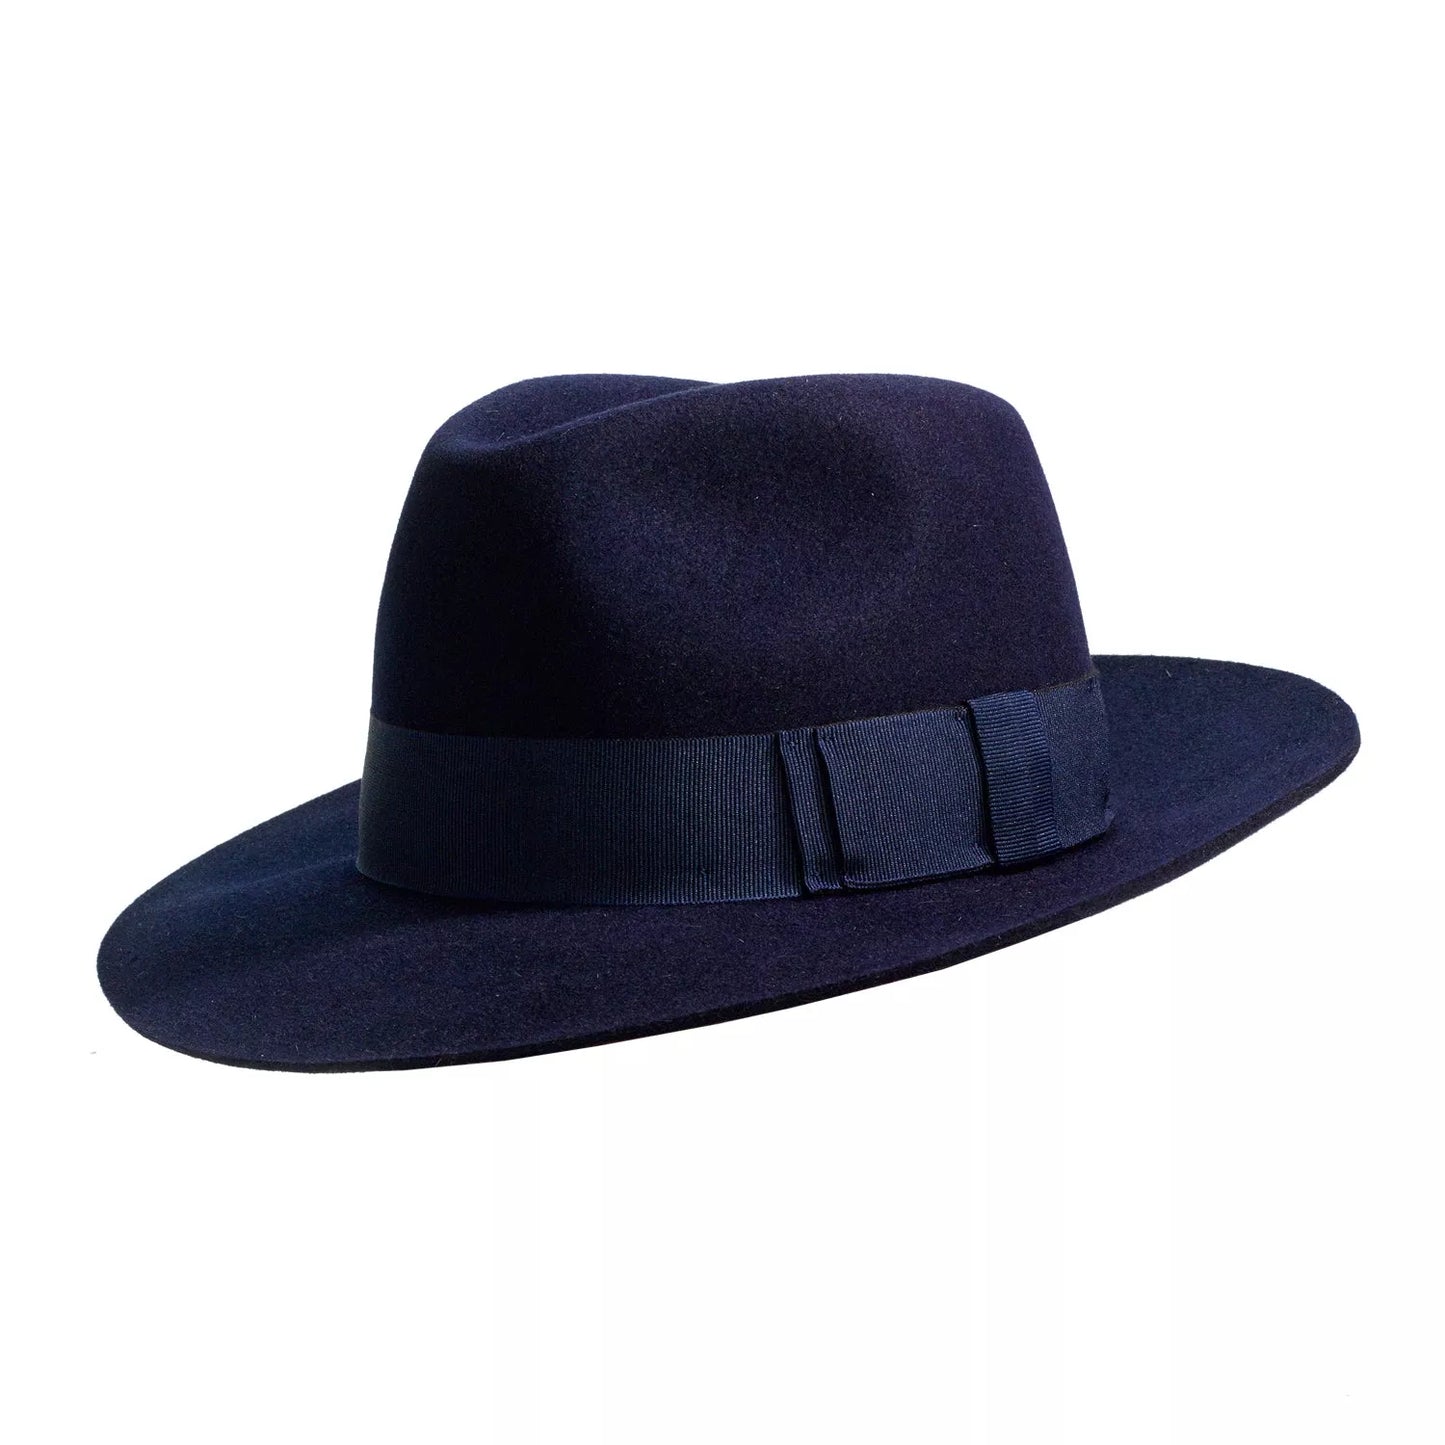 El sombrero Fedora de Manhattan